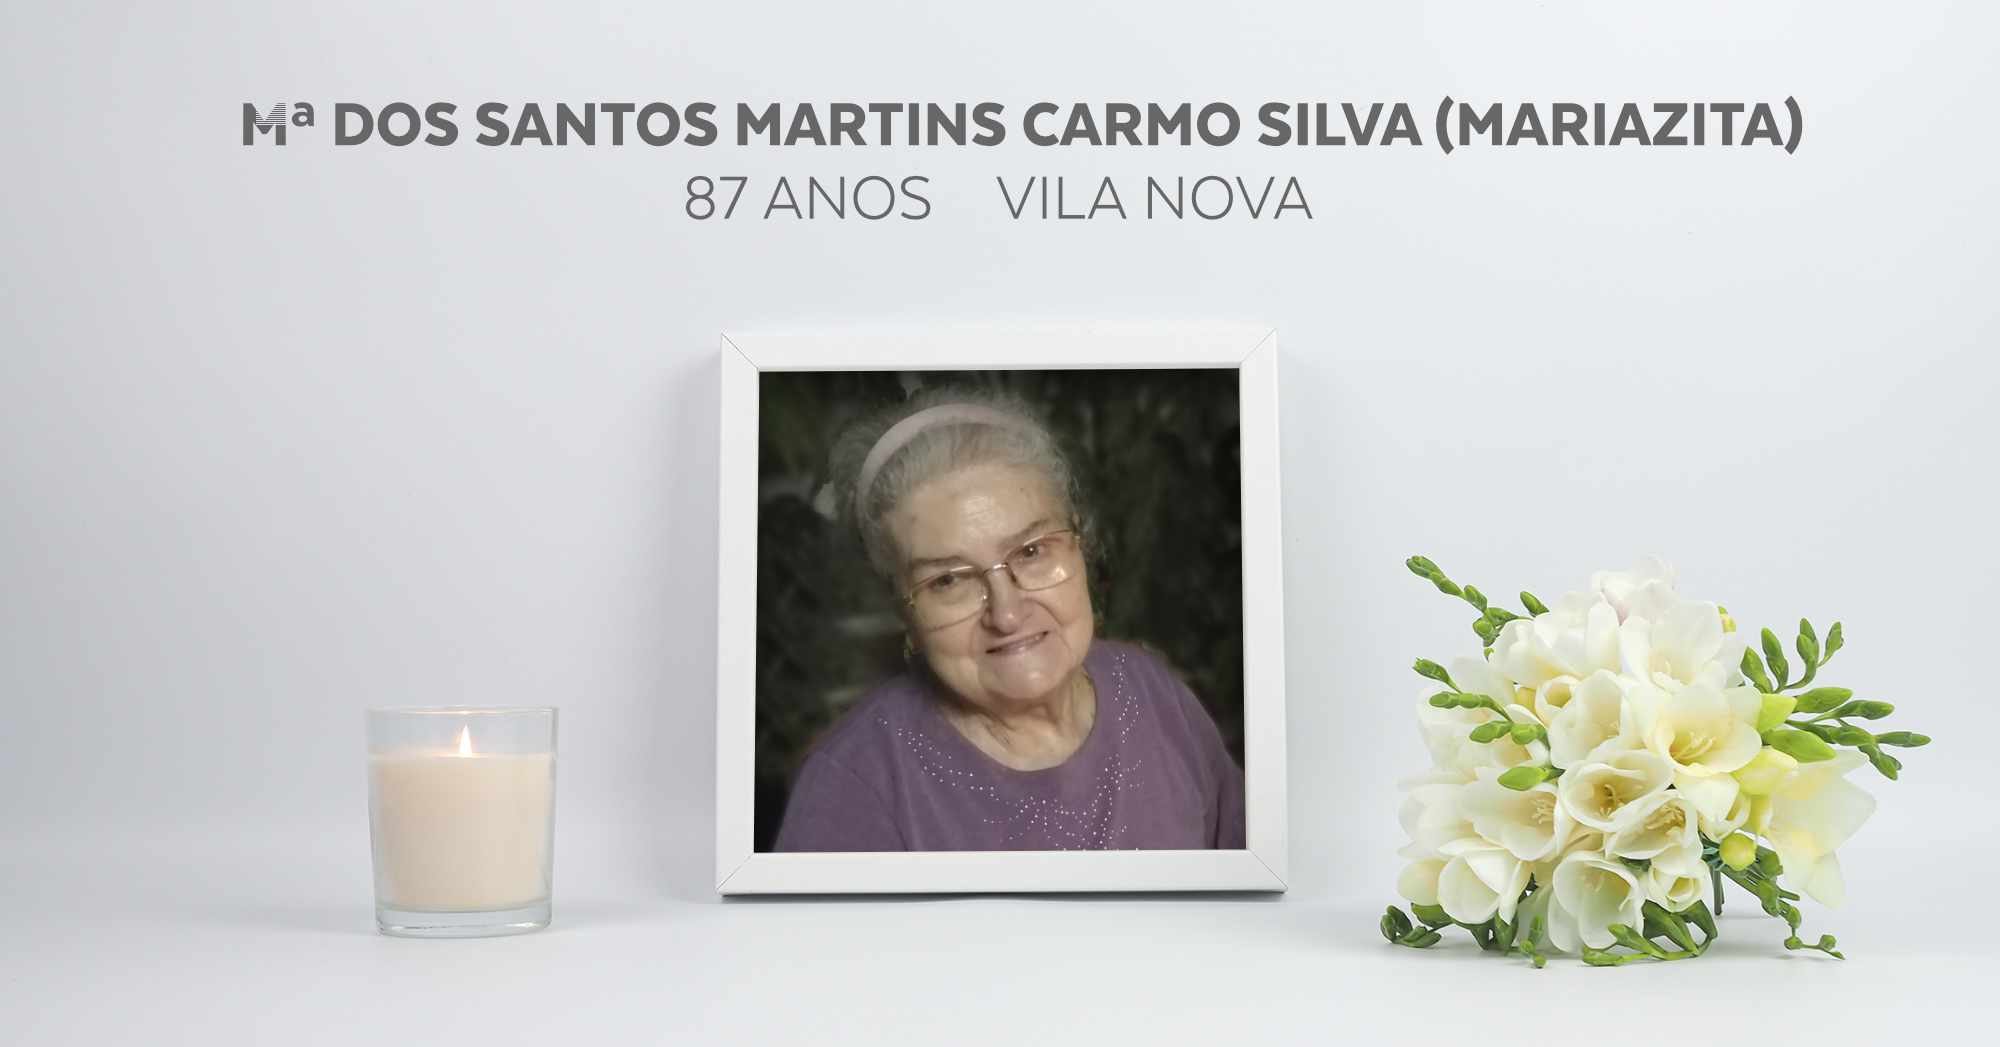 Maria dos Santos Martins Carmo Silva